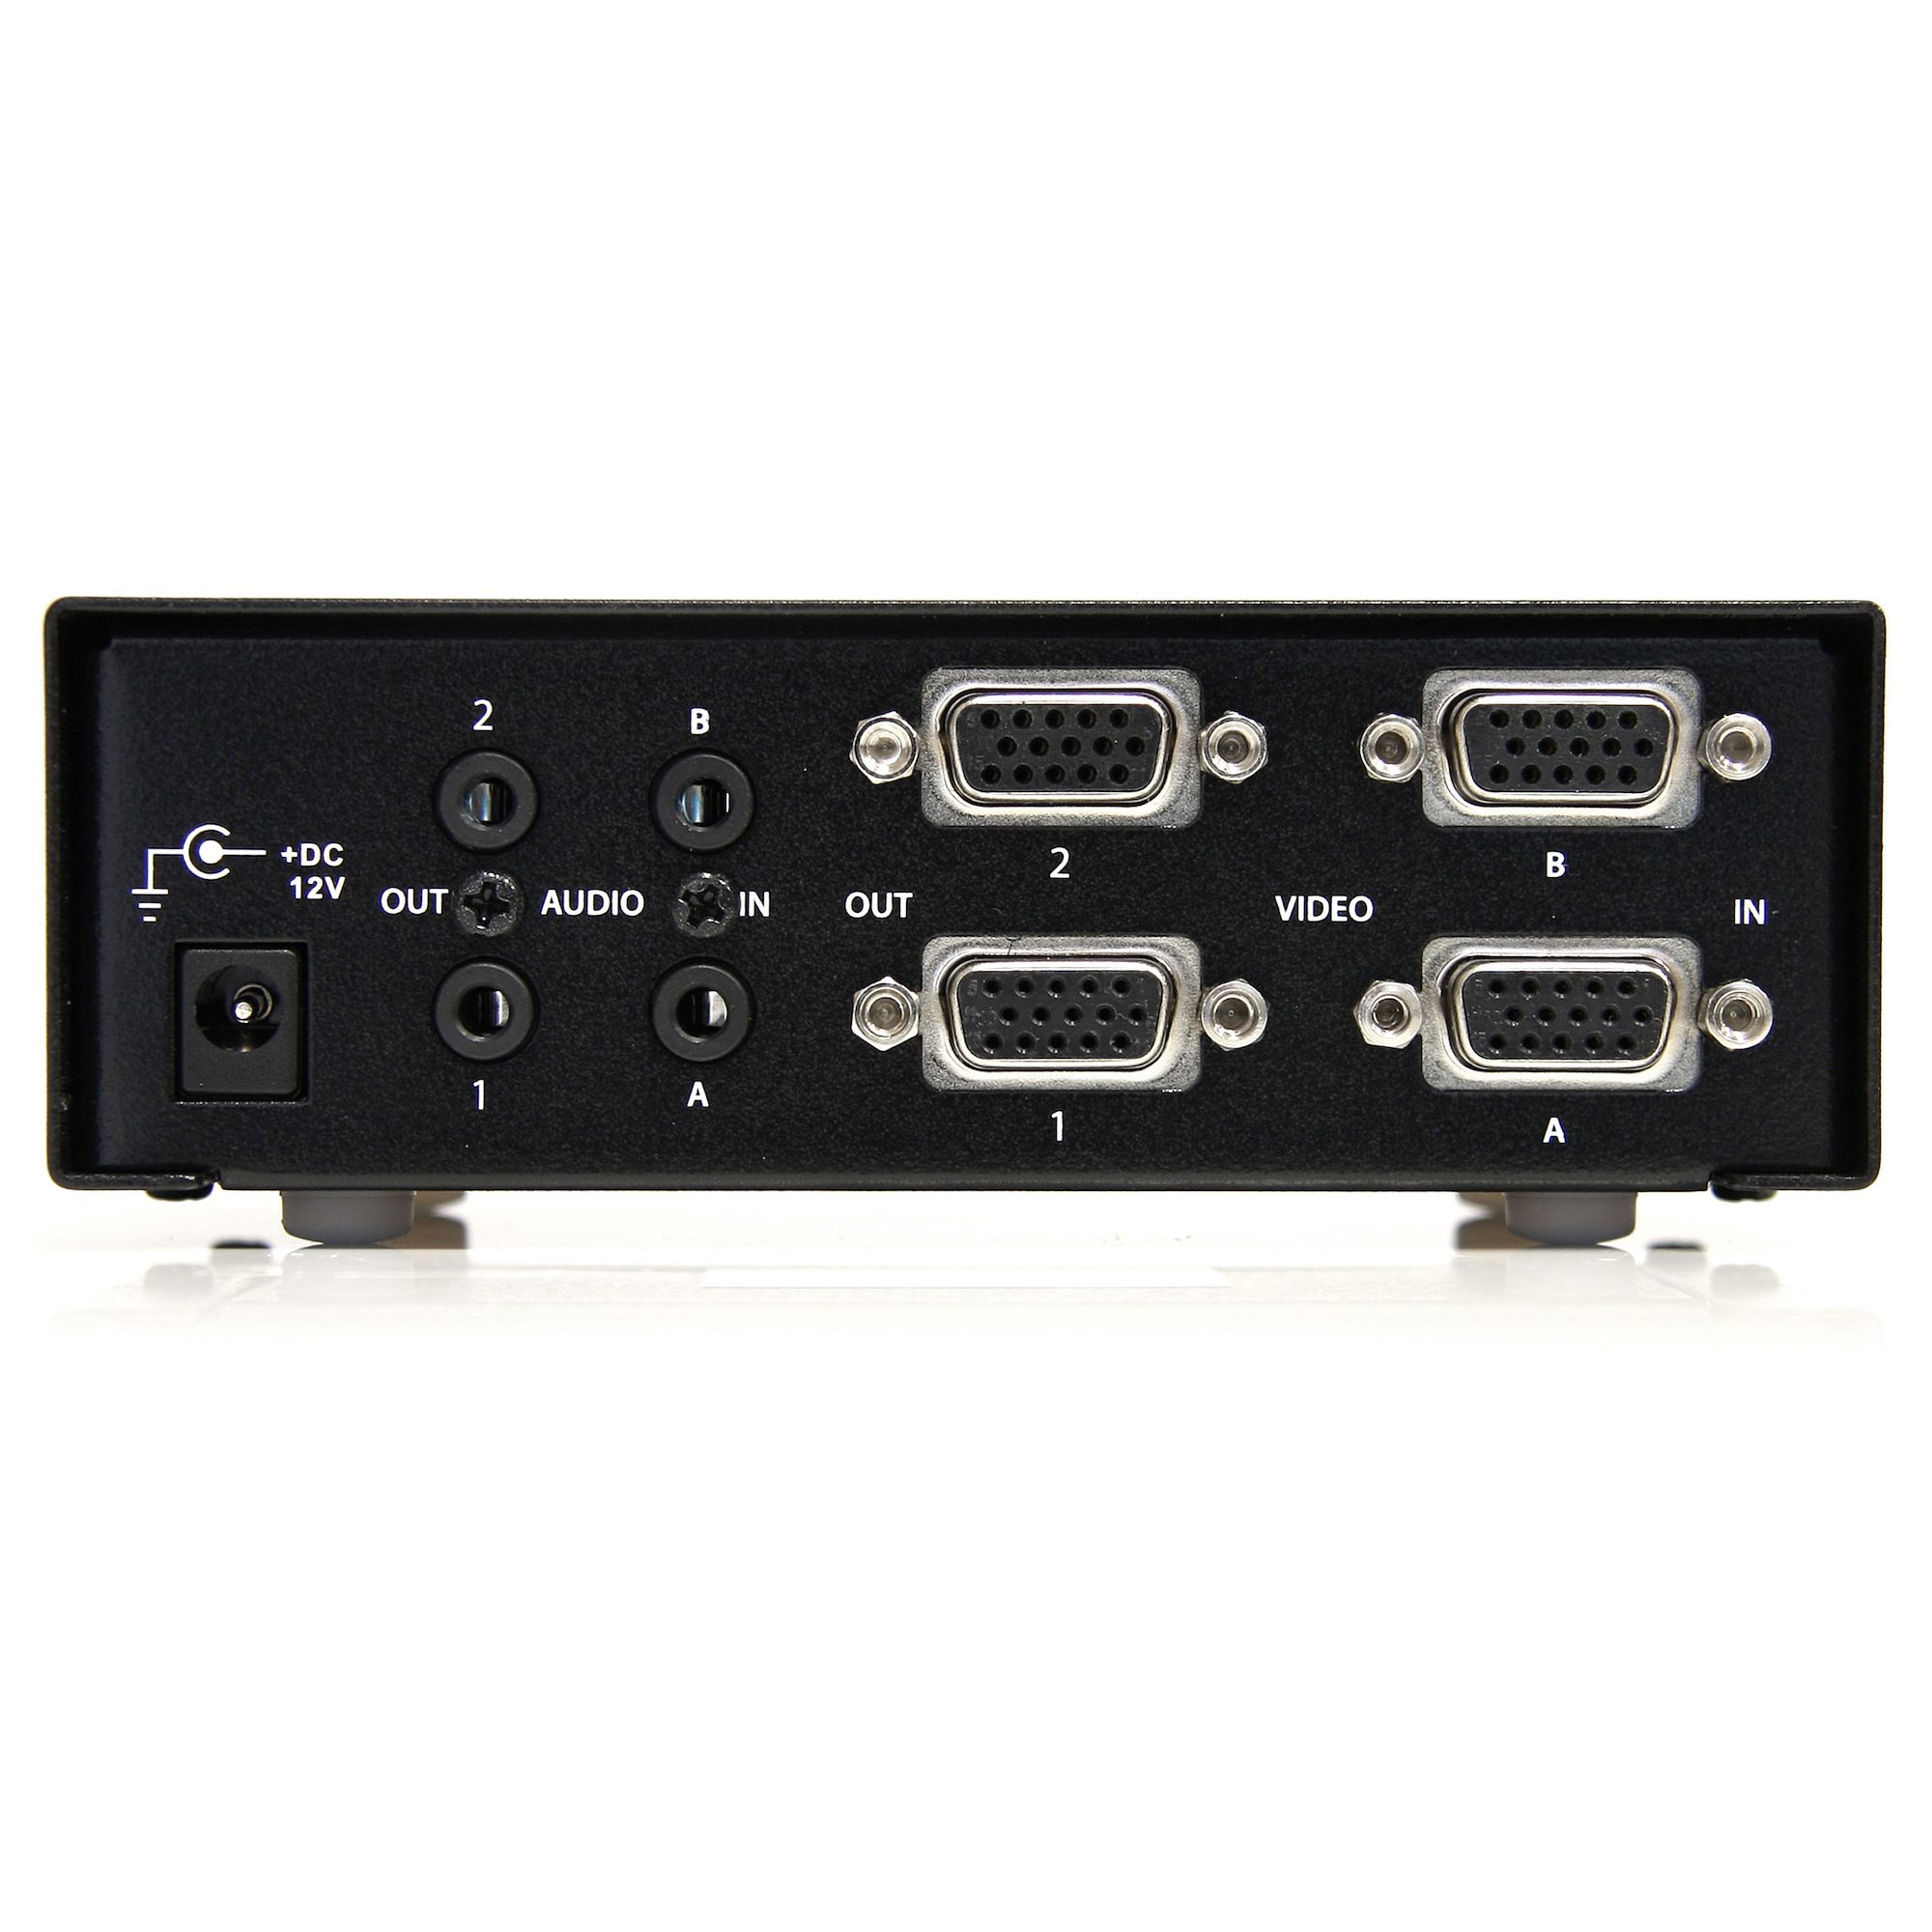 2x2 VGA Matrix Video Switch Splitter - Video Switchers